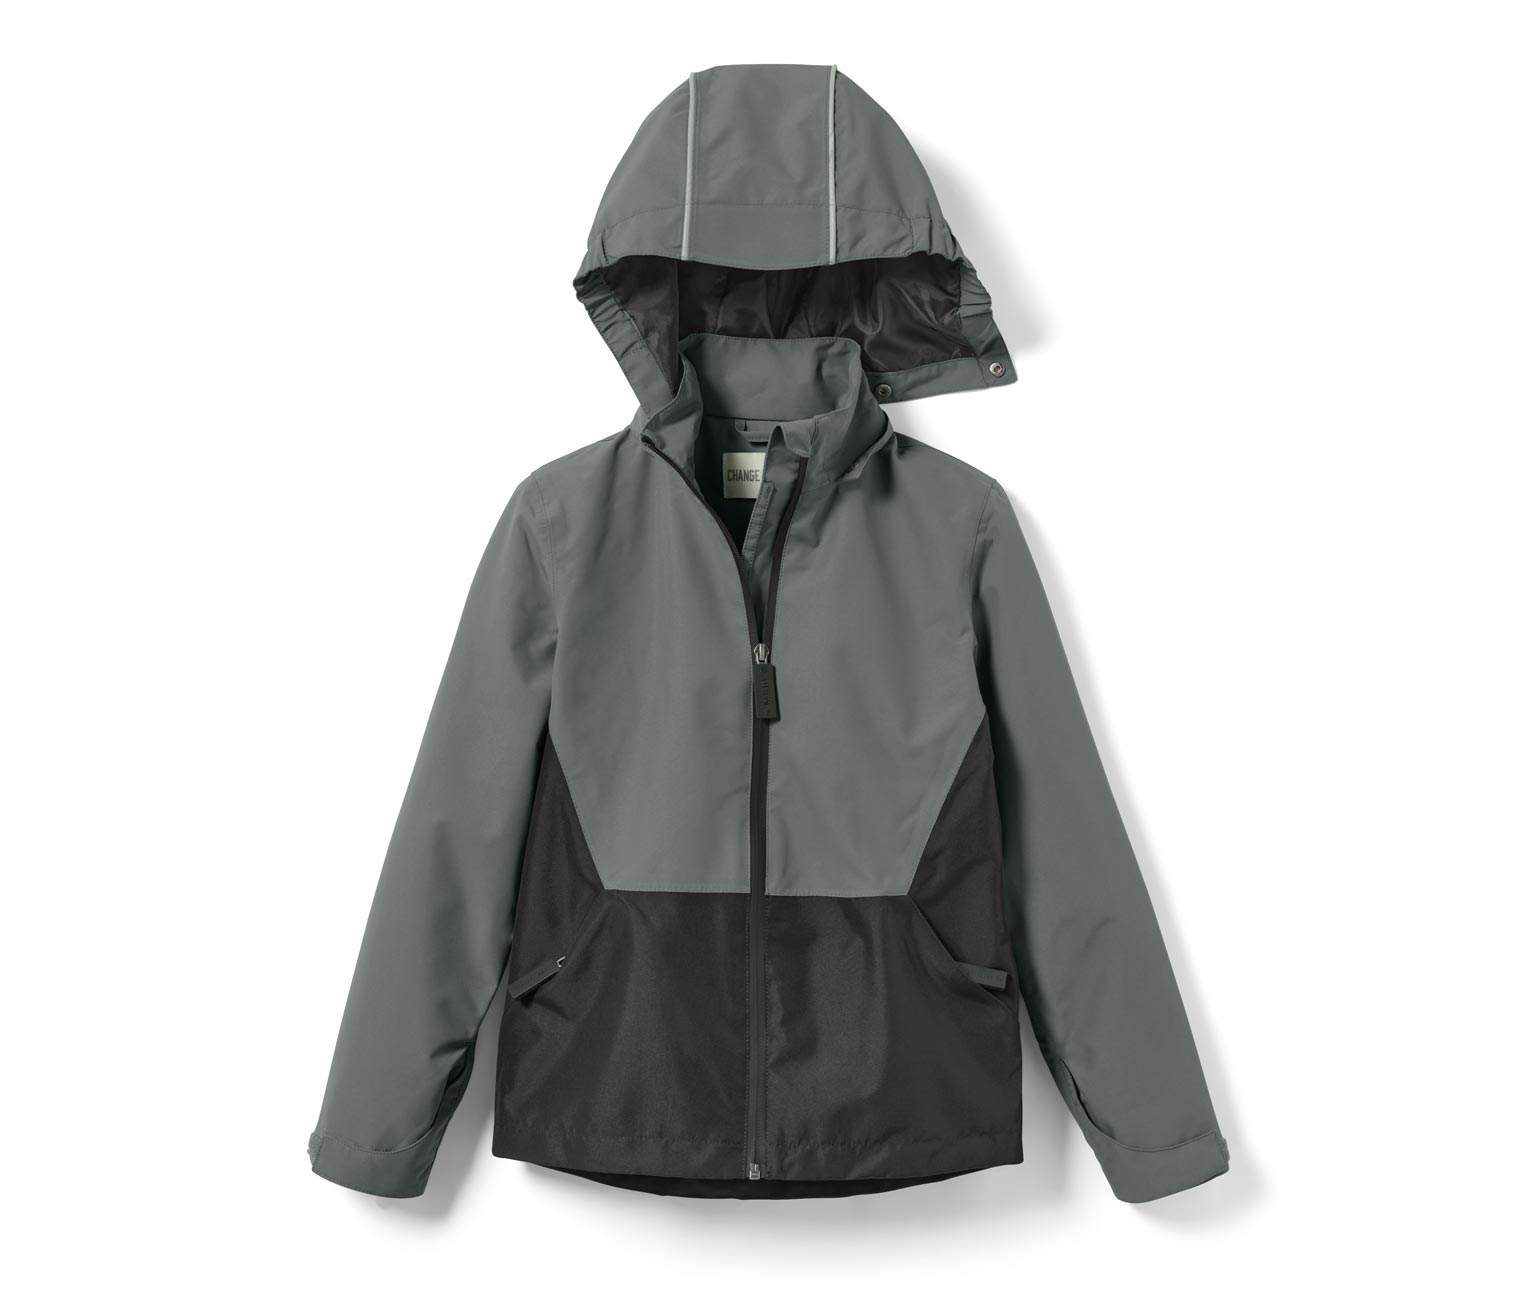 Detská bunda do dažďa 658285 z e-shopu Tchibo.sk